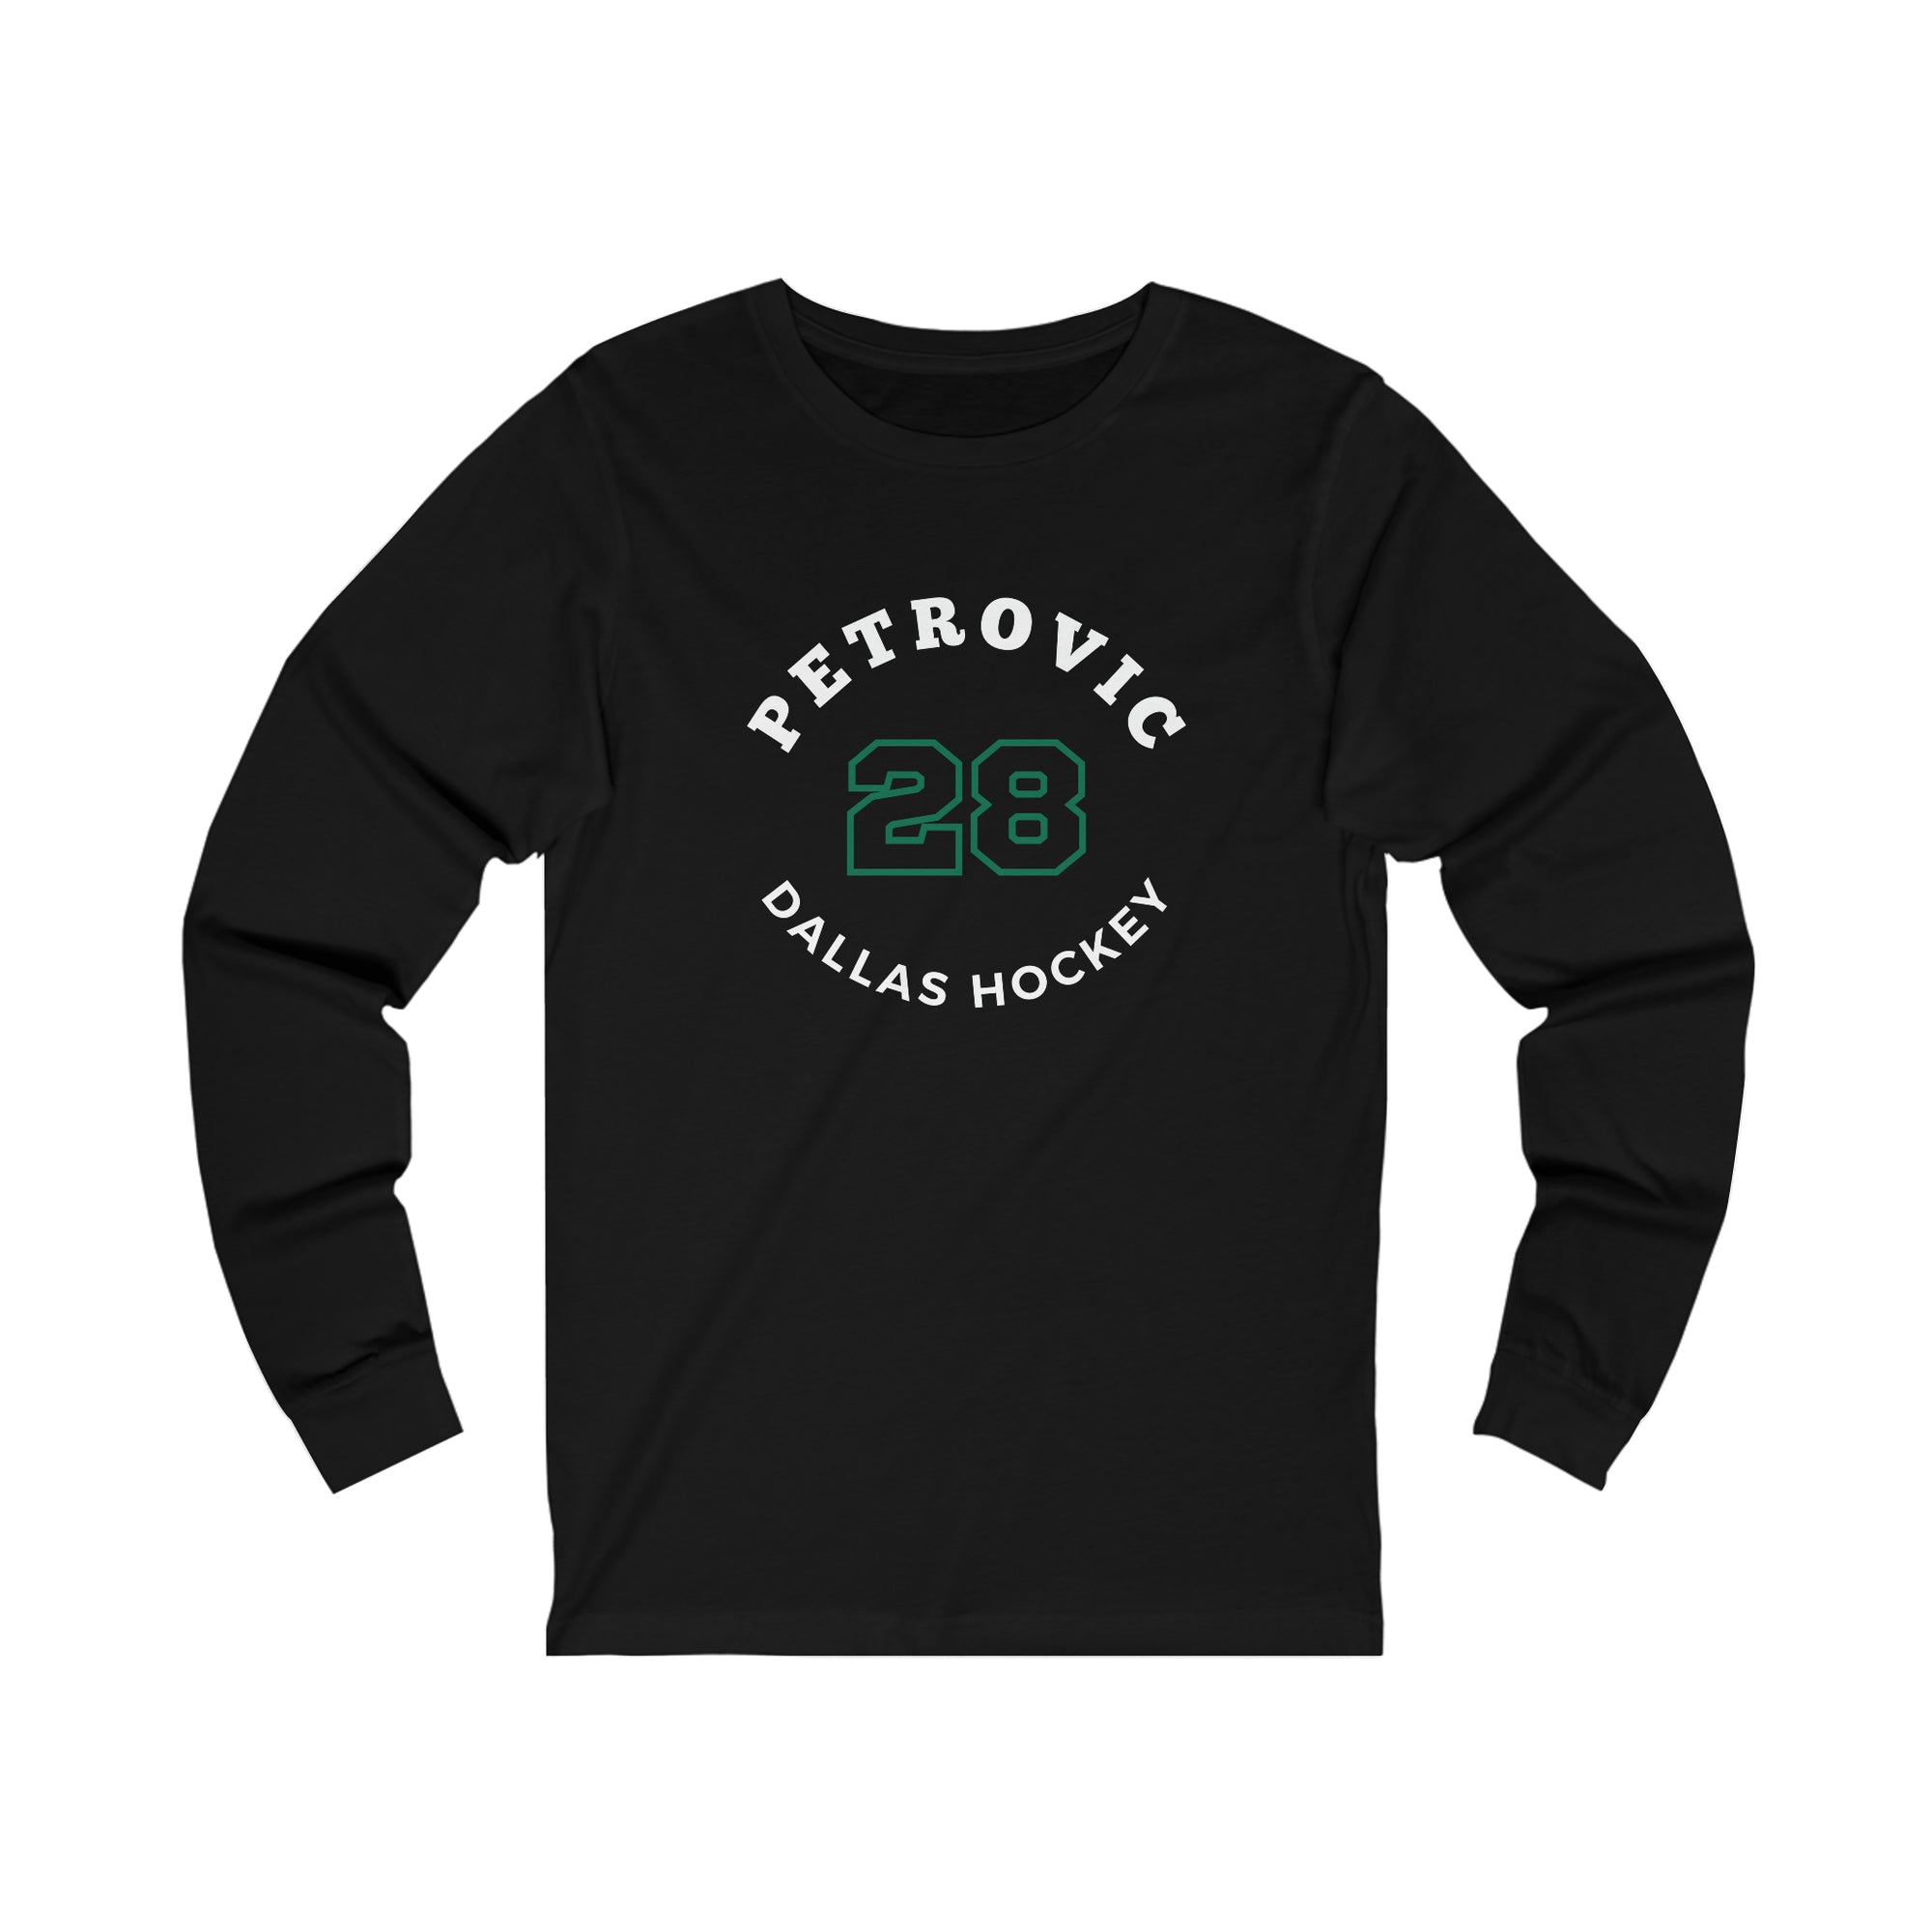 Petrovic 28 Dallas Hockey Number Arch Design Unisex Jersey Long Sleeve Shirt